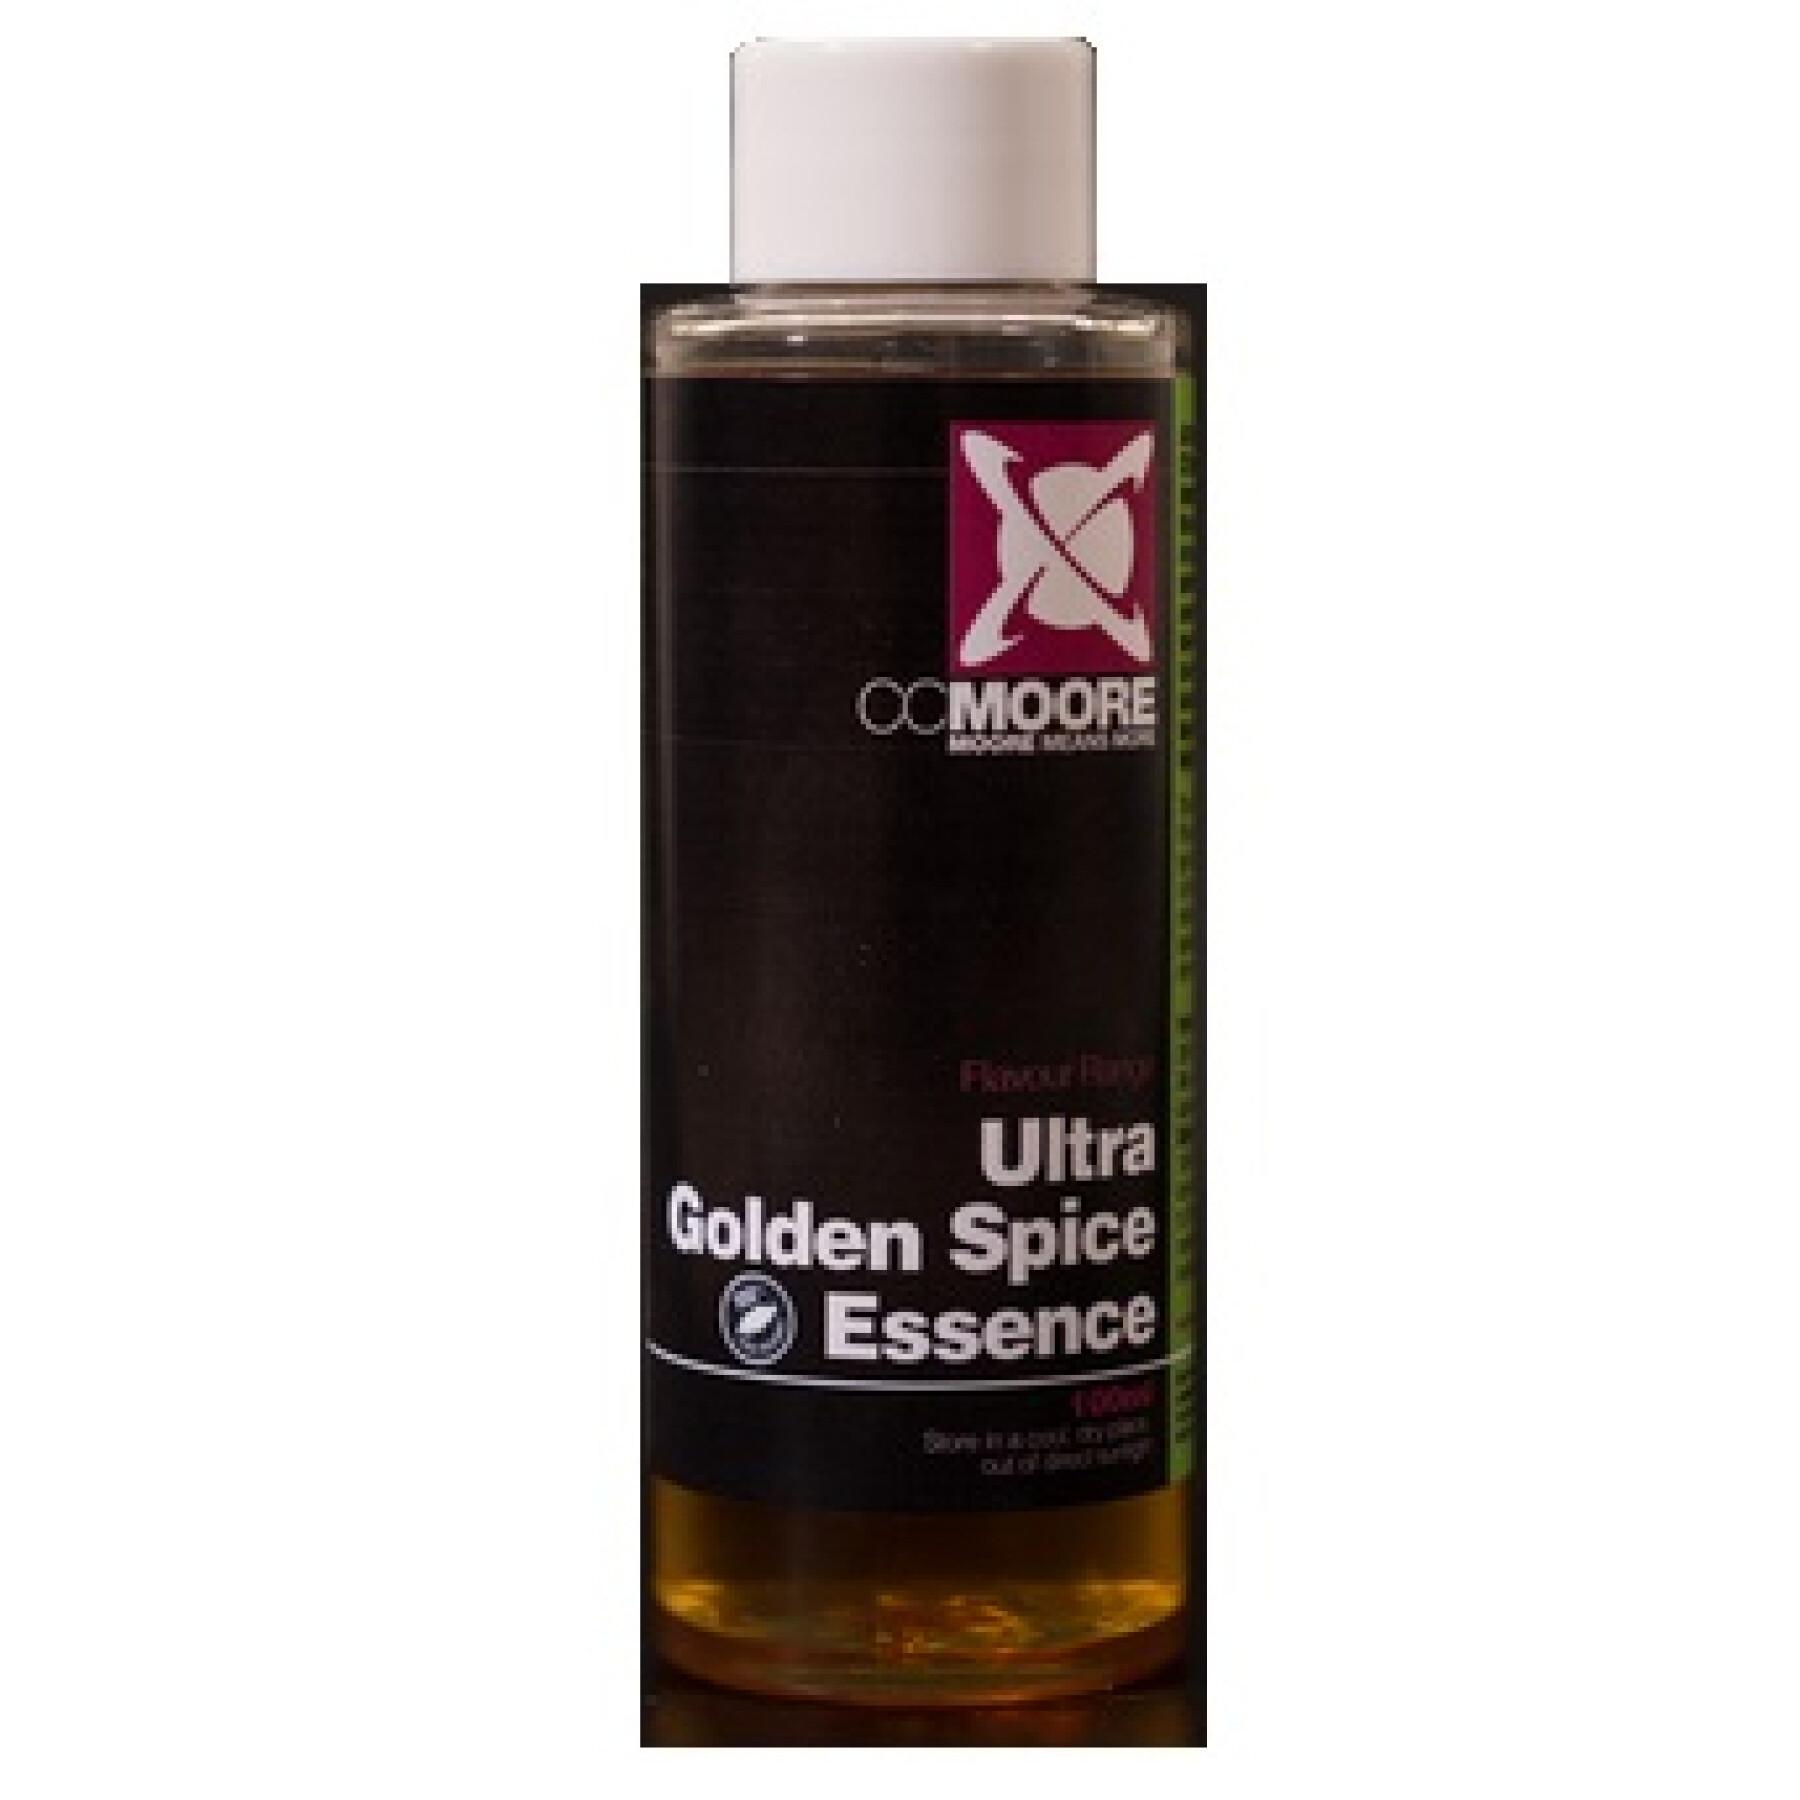 Aditivos líquidos CCMoore Ultra Golden Spice Essence 100ml